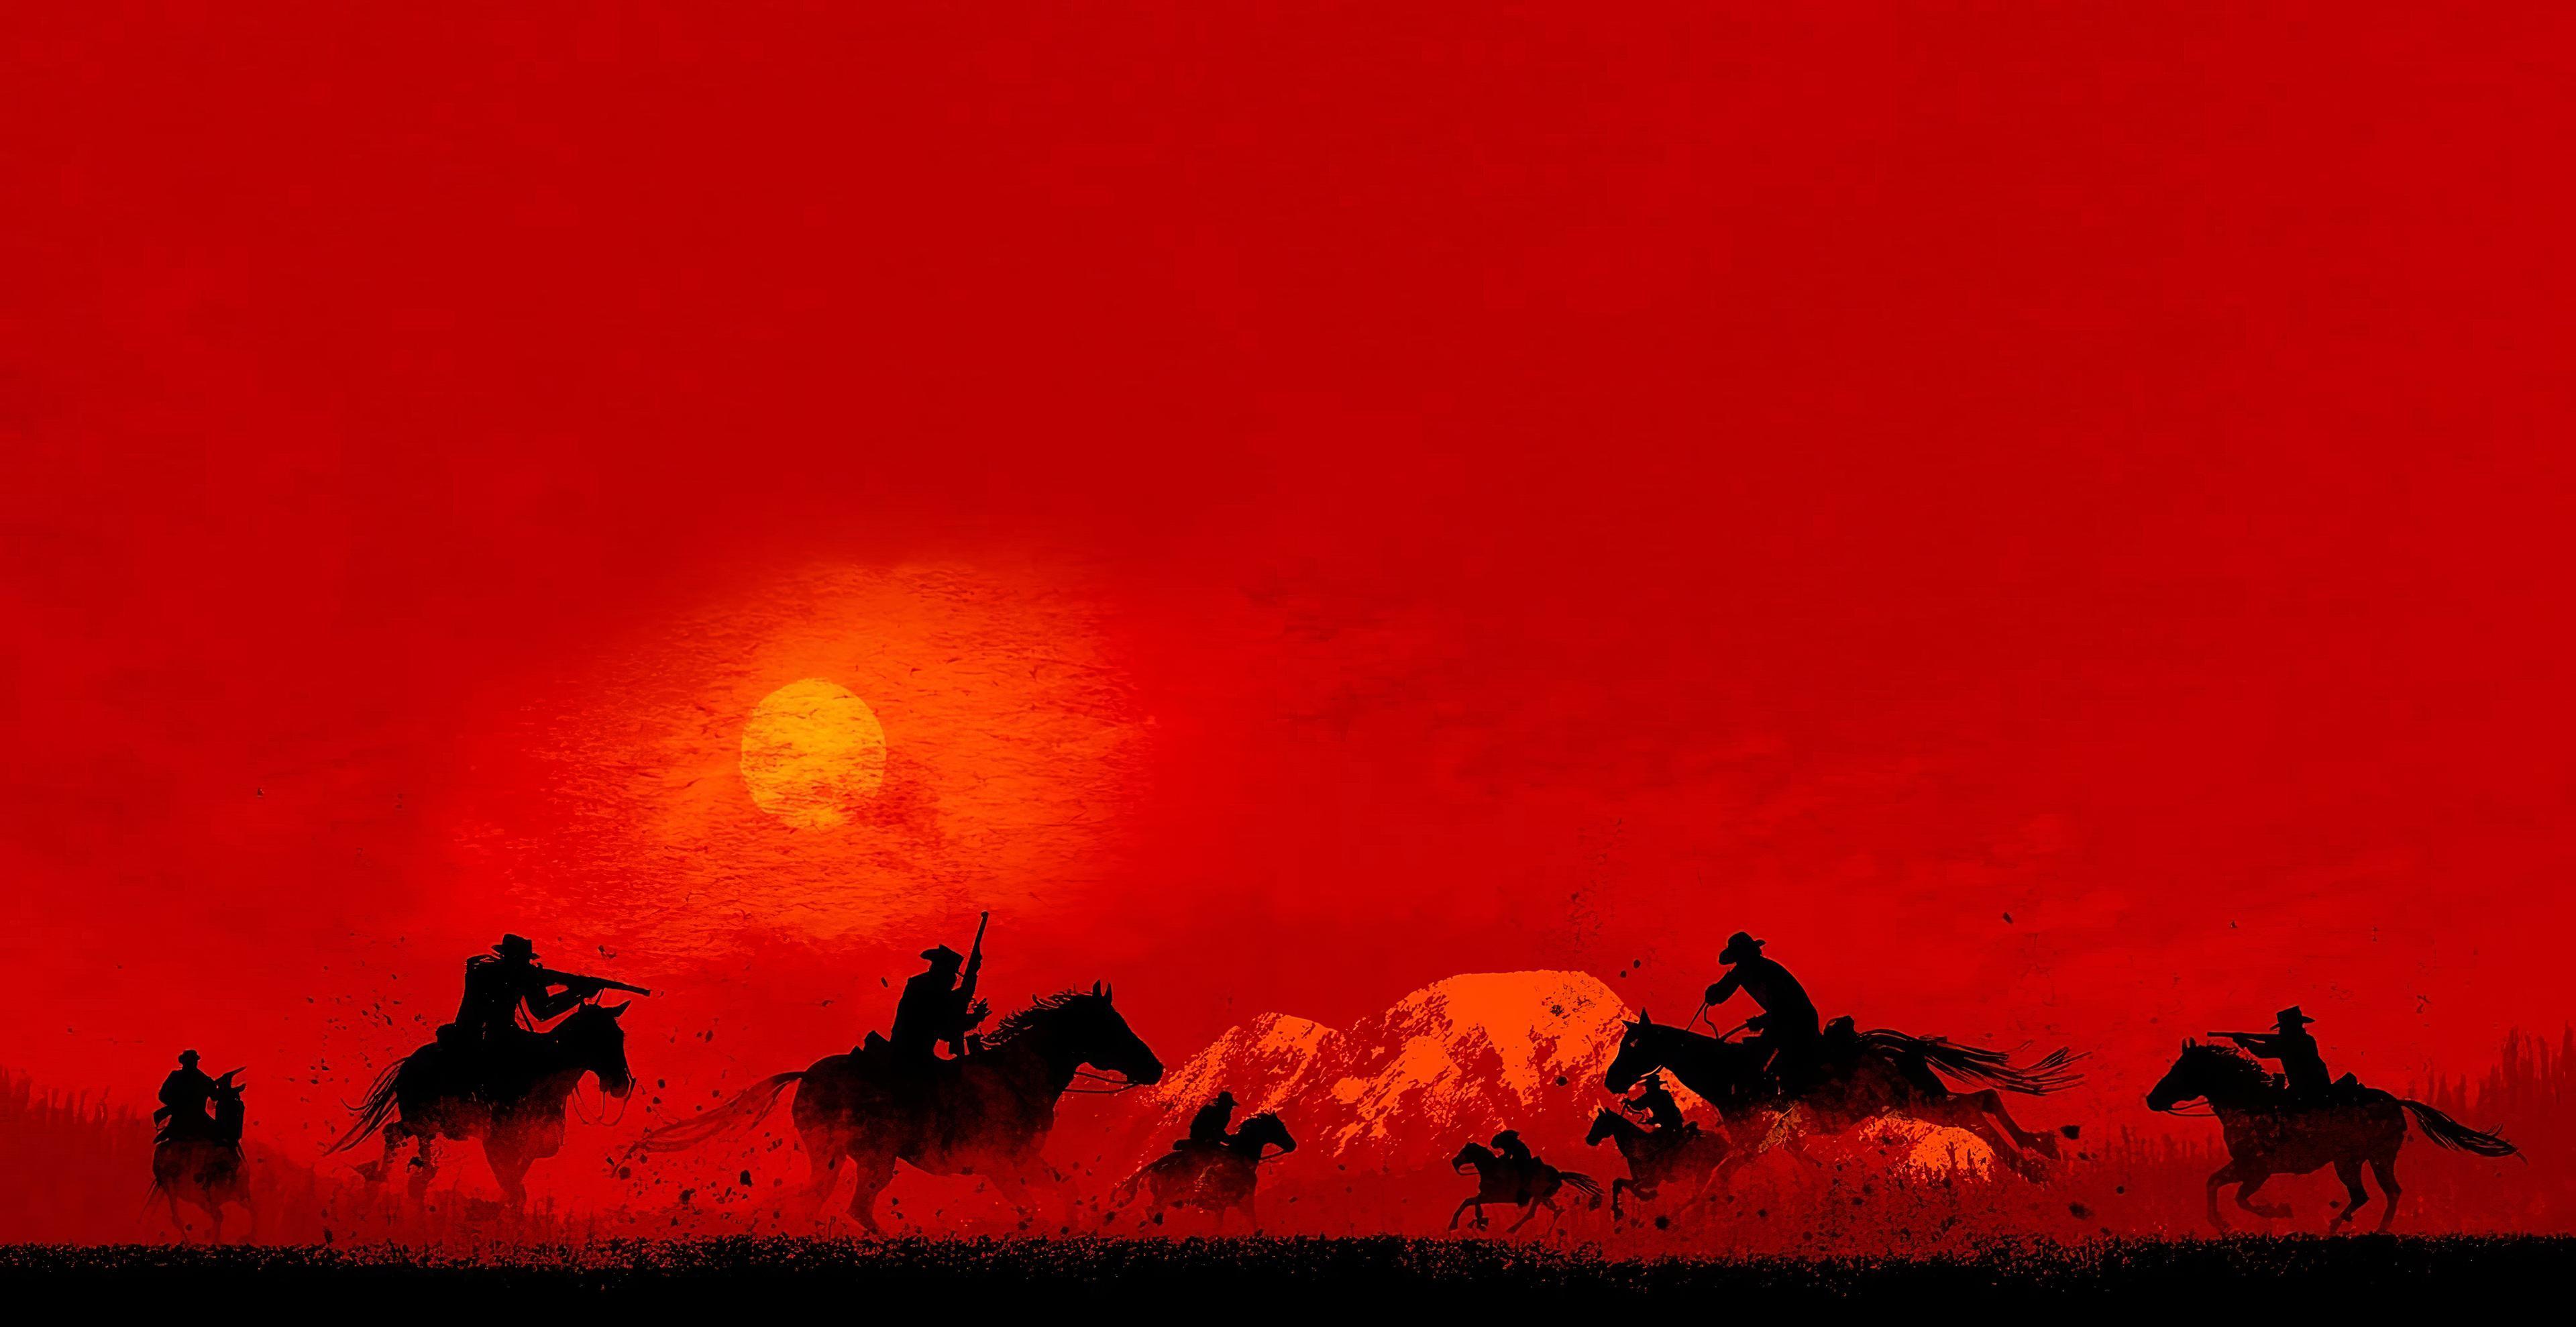 Red Dead Redemption 2 Game 2019 Wallpaper, HD Games 4K Wallpaper